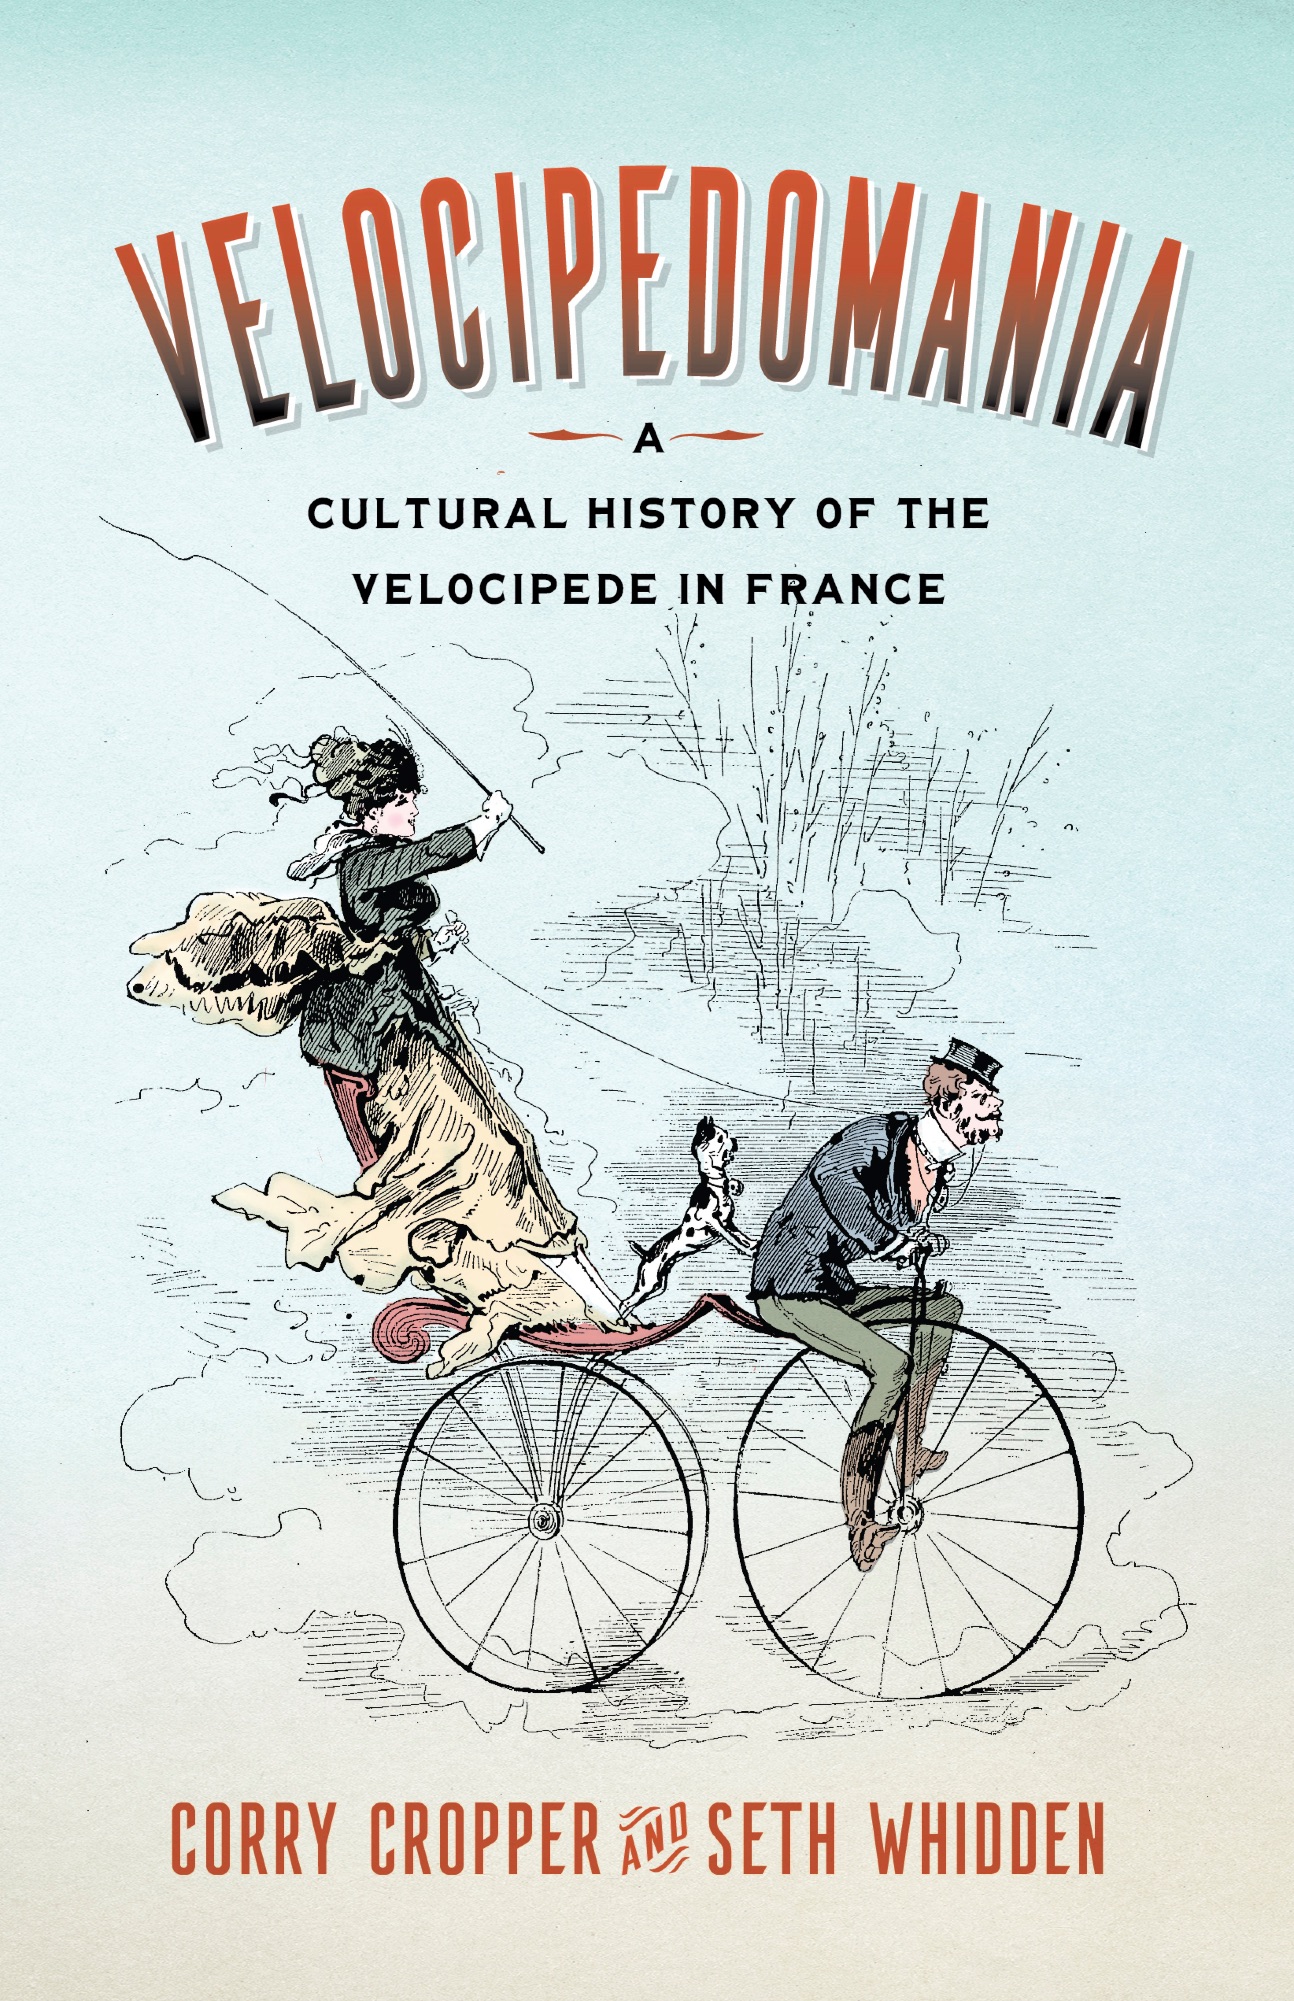 Corry Cropper, Seth Whidden, Velocipedomania. A Cultural History of the Velocipede in France